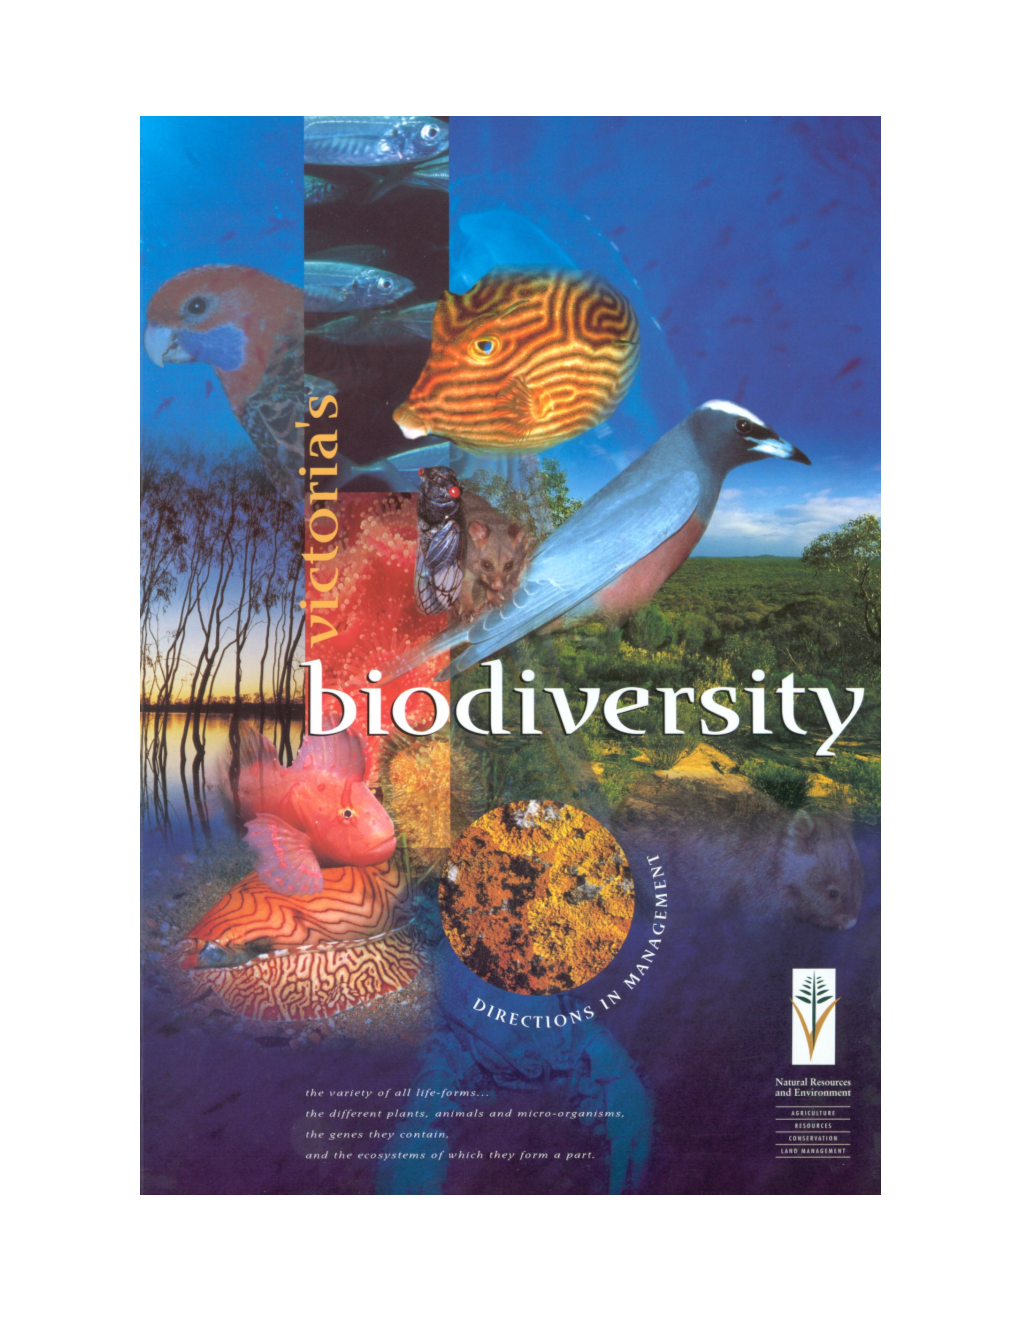 ' Victoria's Biodiversity: – Directions in Management'